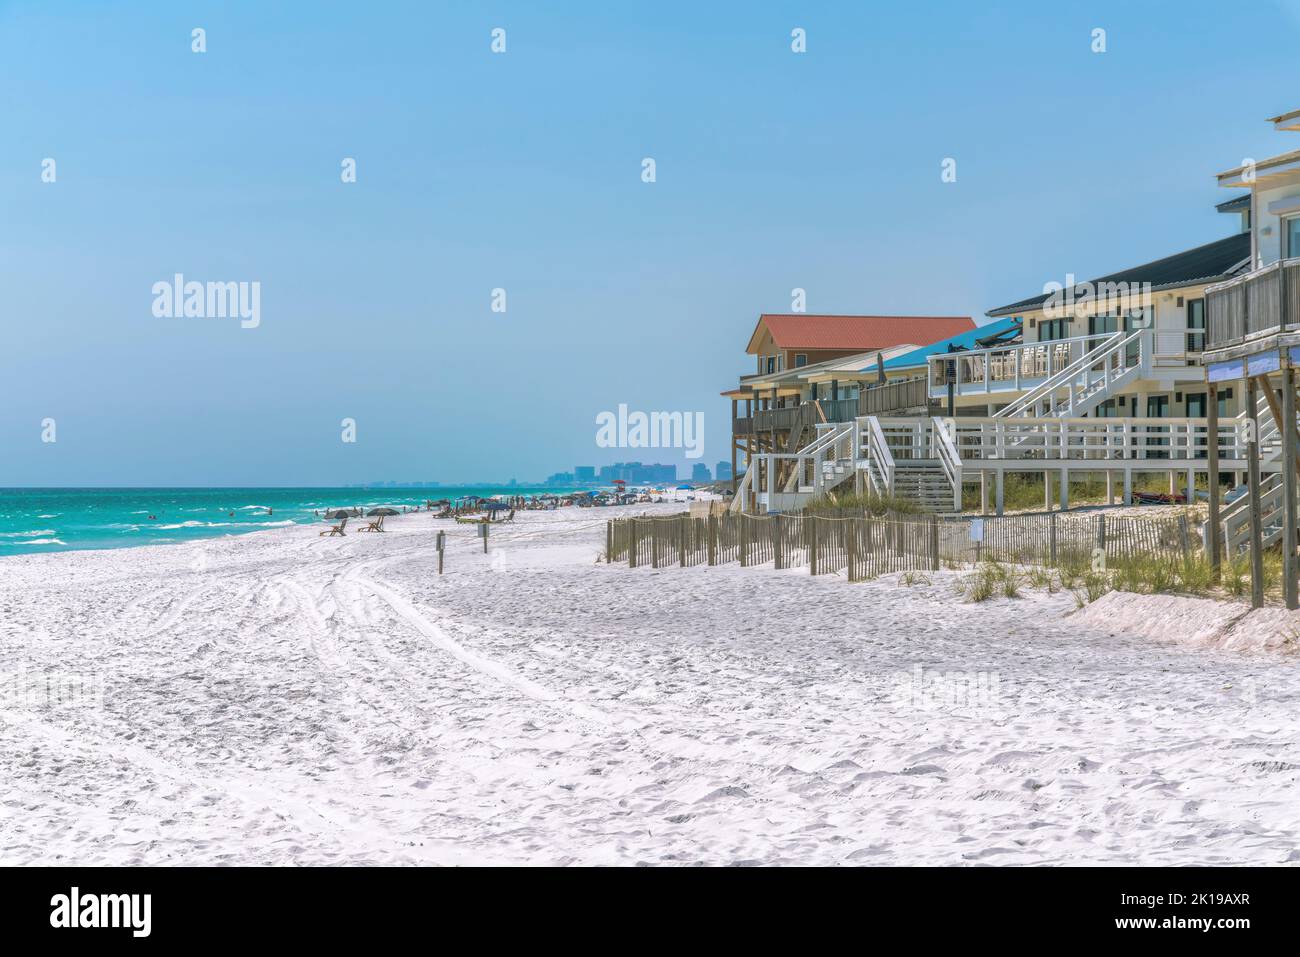 Case di spiaggia recintate vicino alla spiaggia di sabbia bianca di una spiaggia a Destin, Florida Foto Stock